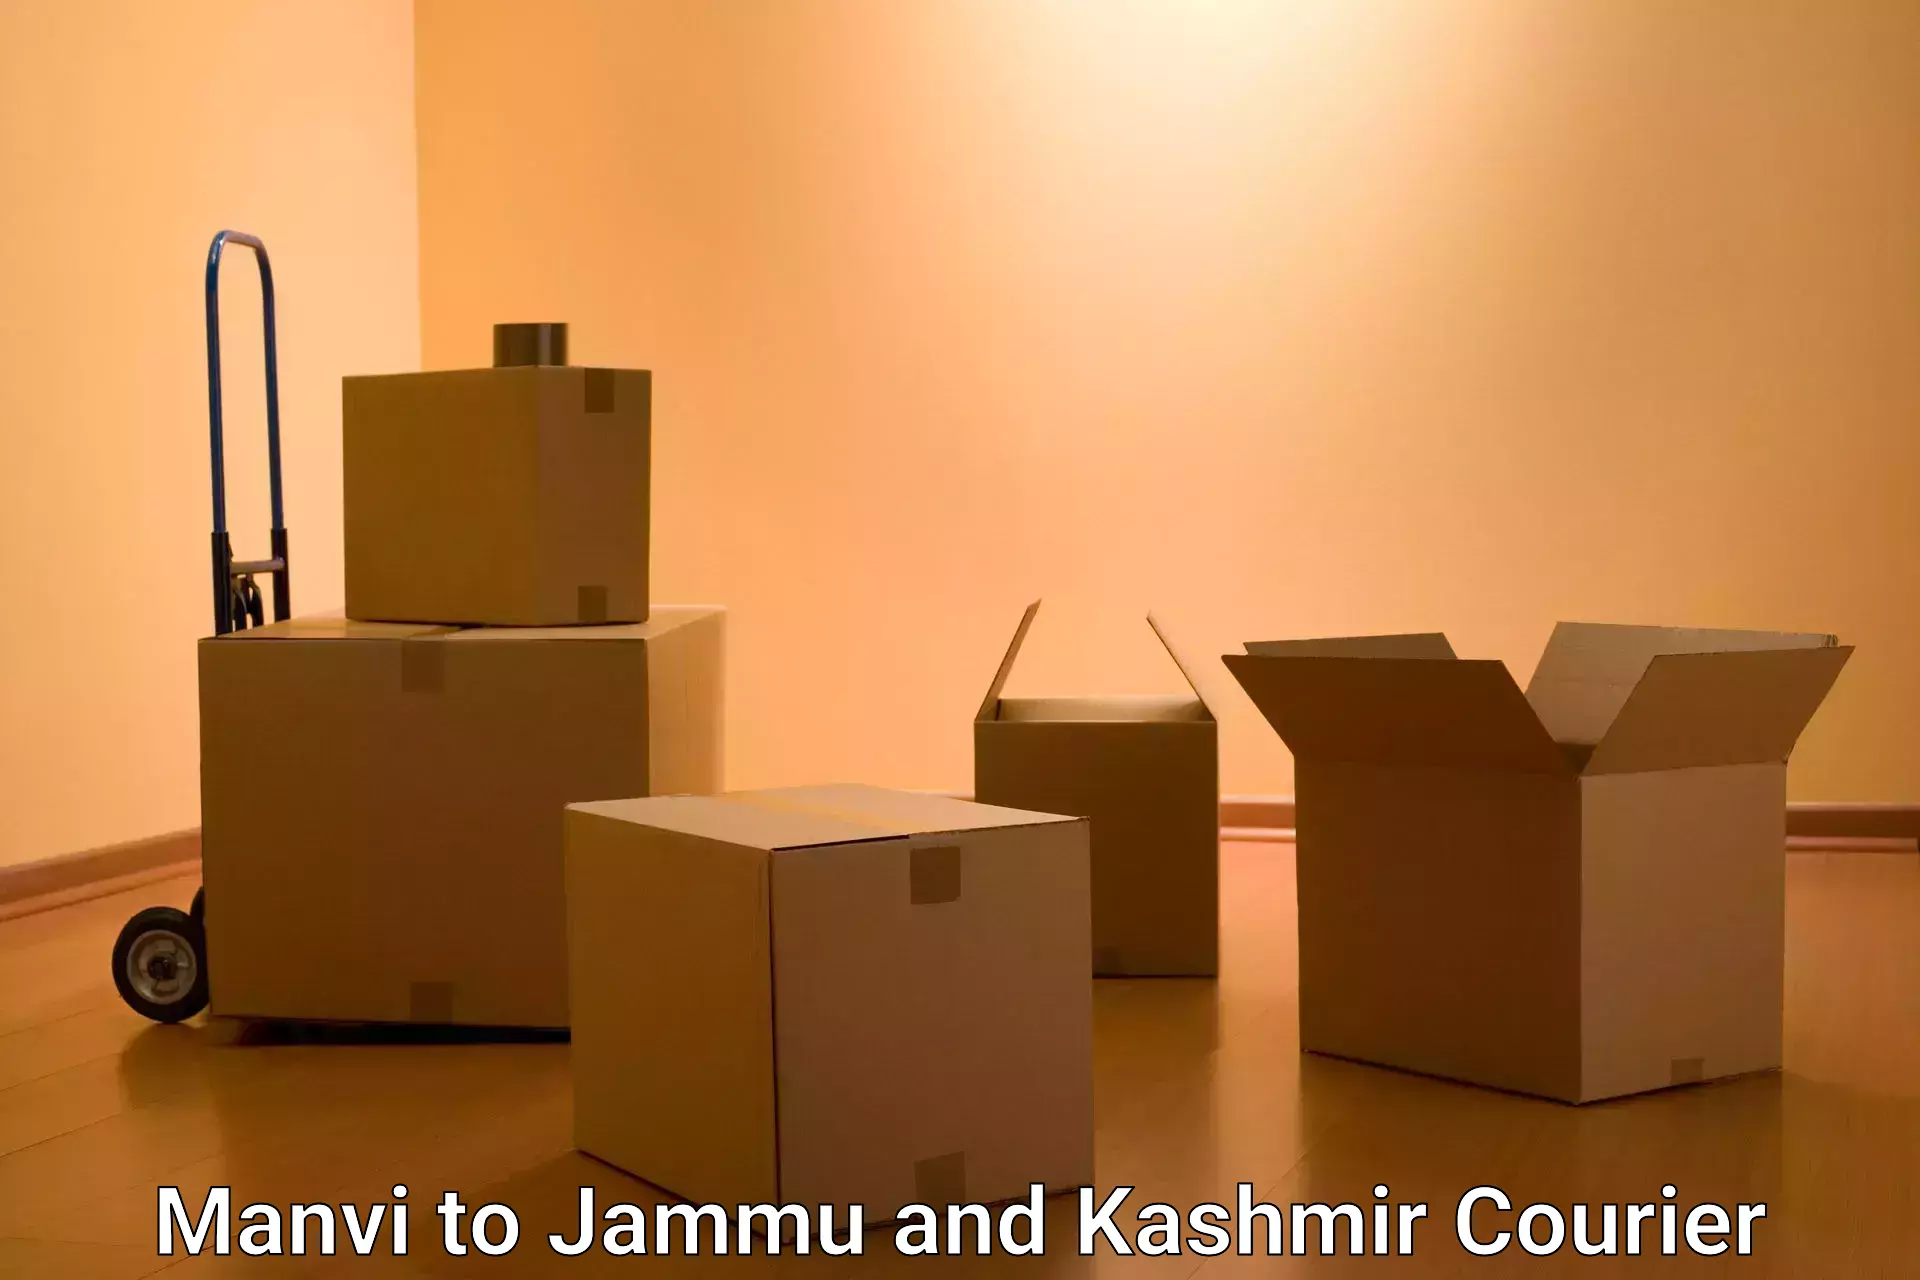 Courier service partnerships Manvi to Jammu and Kashmir